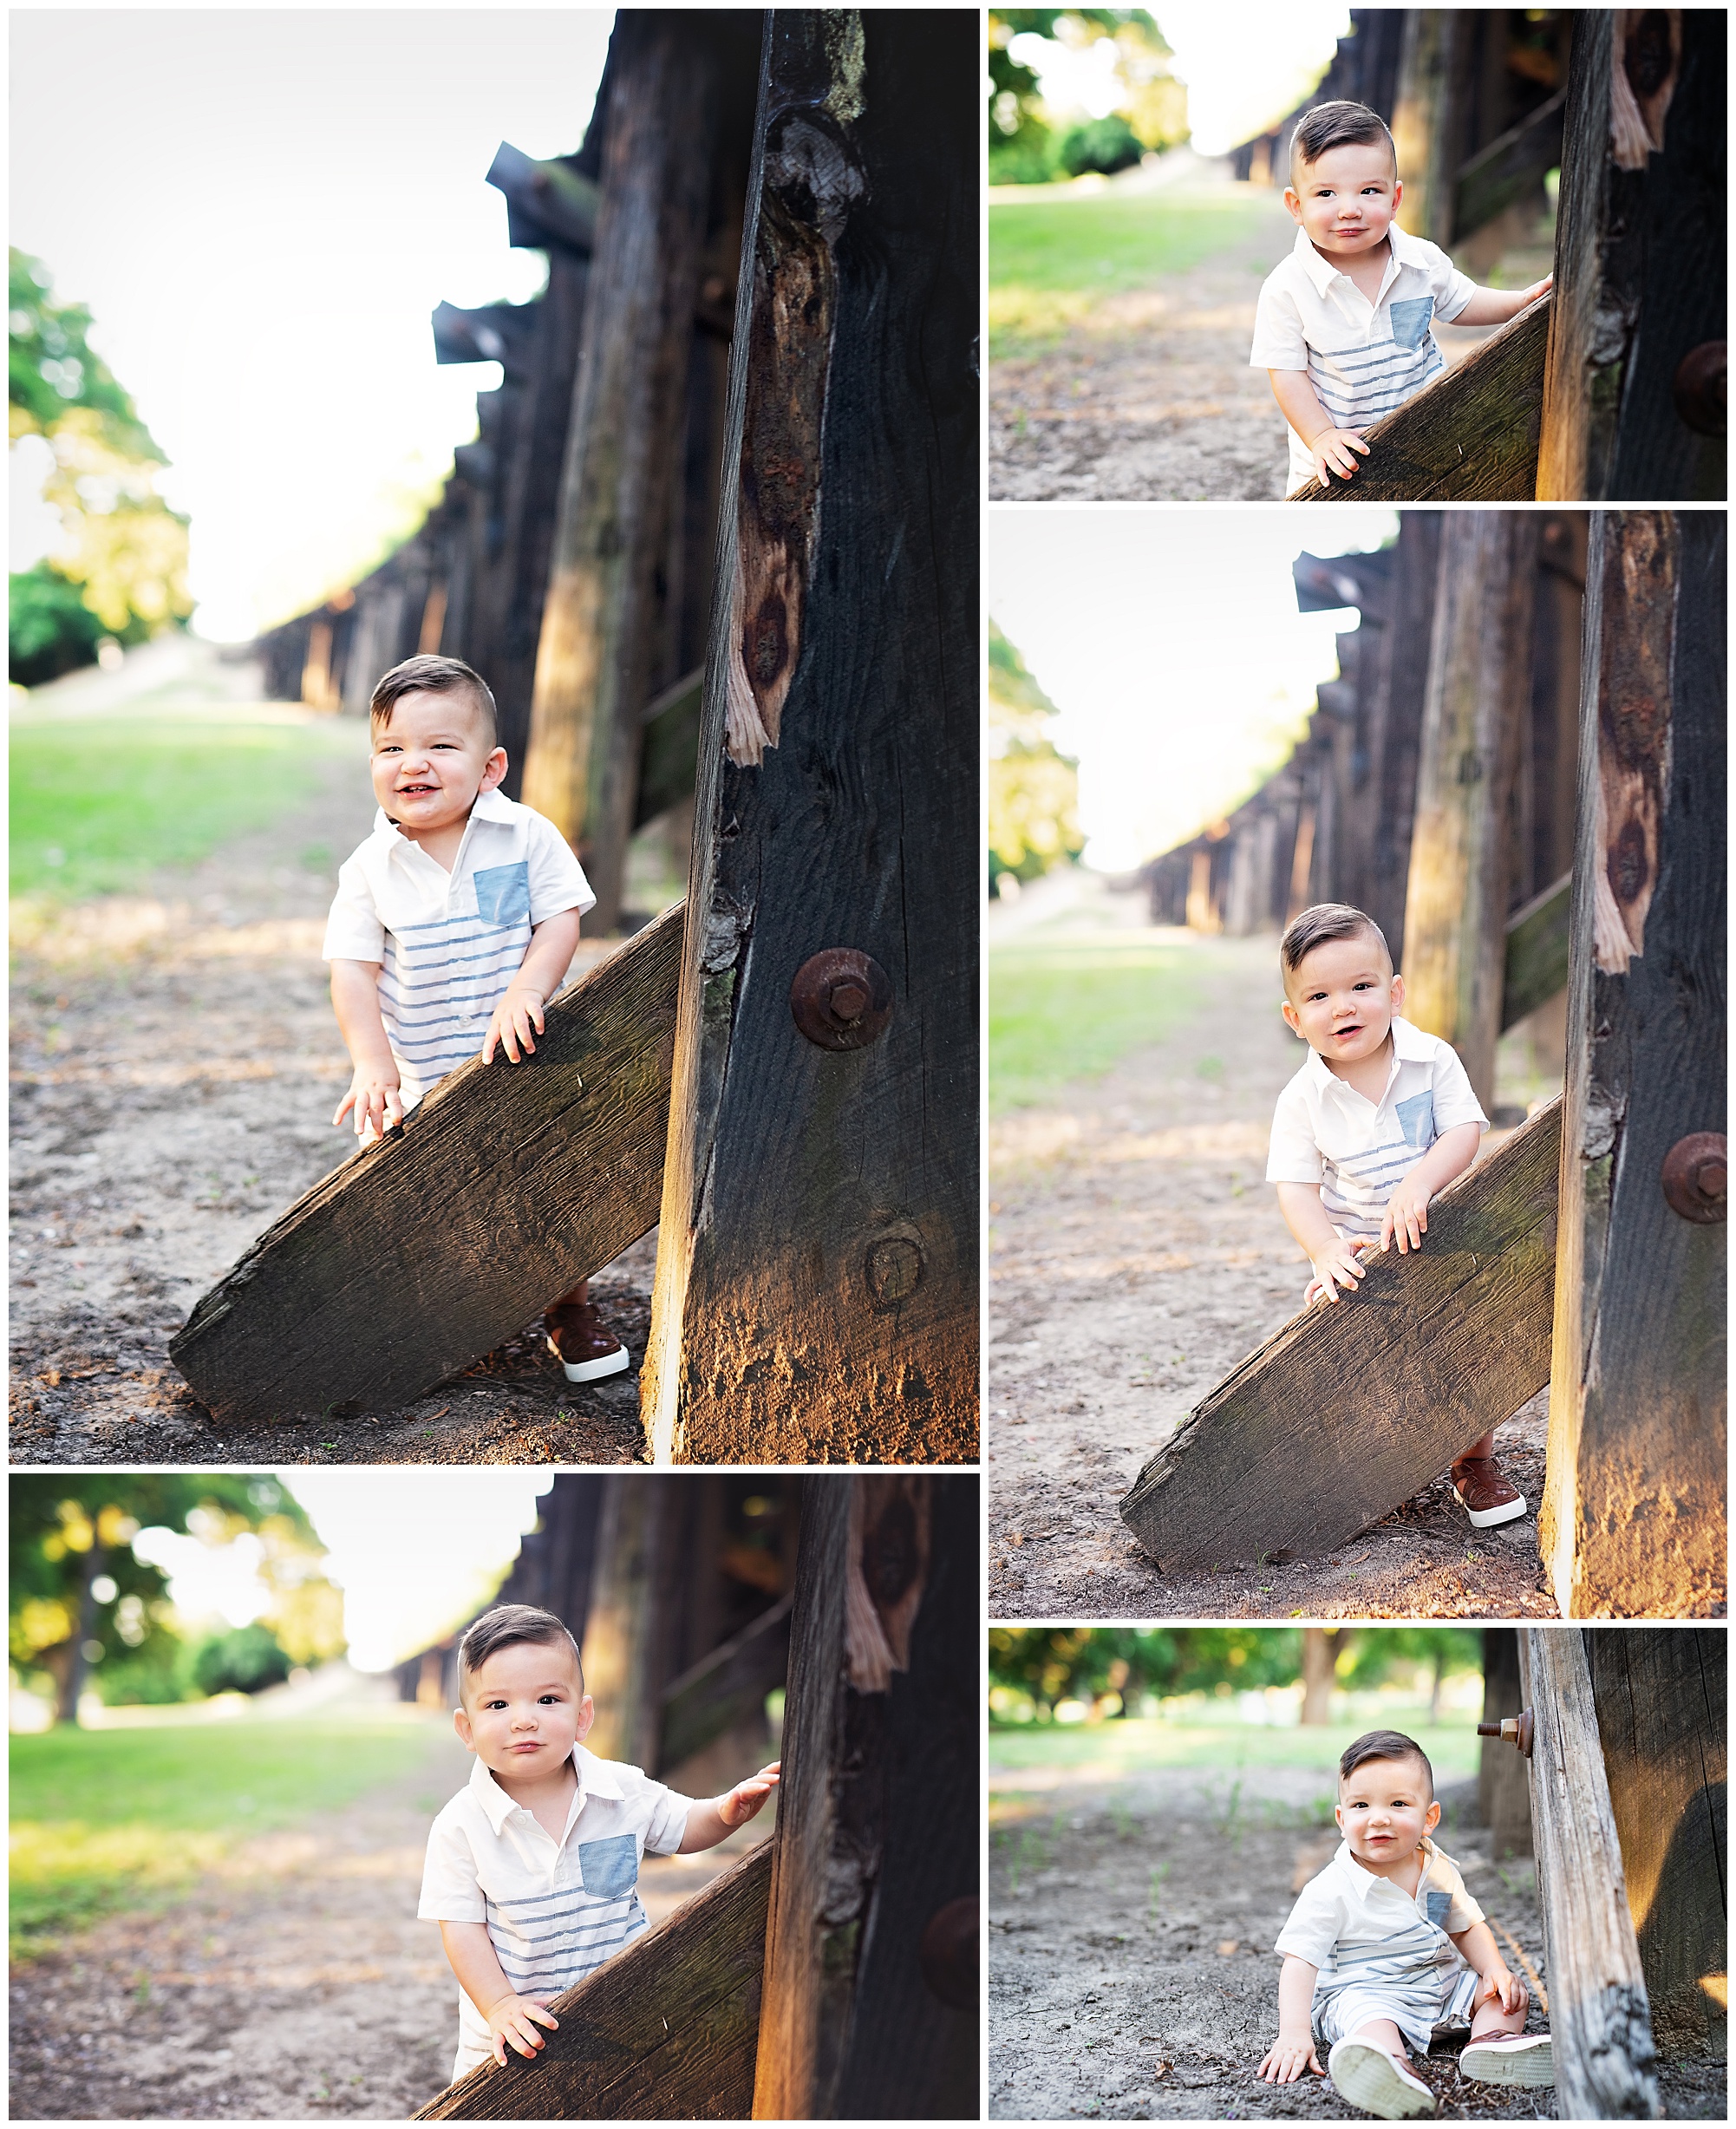 little boy smiling near a train track bridge